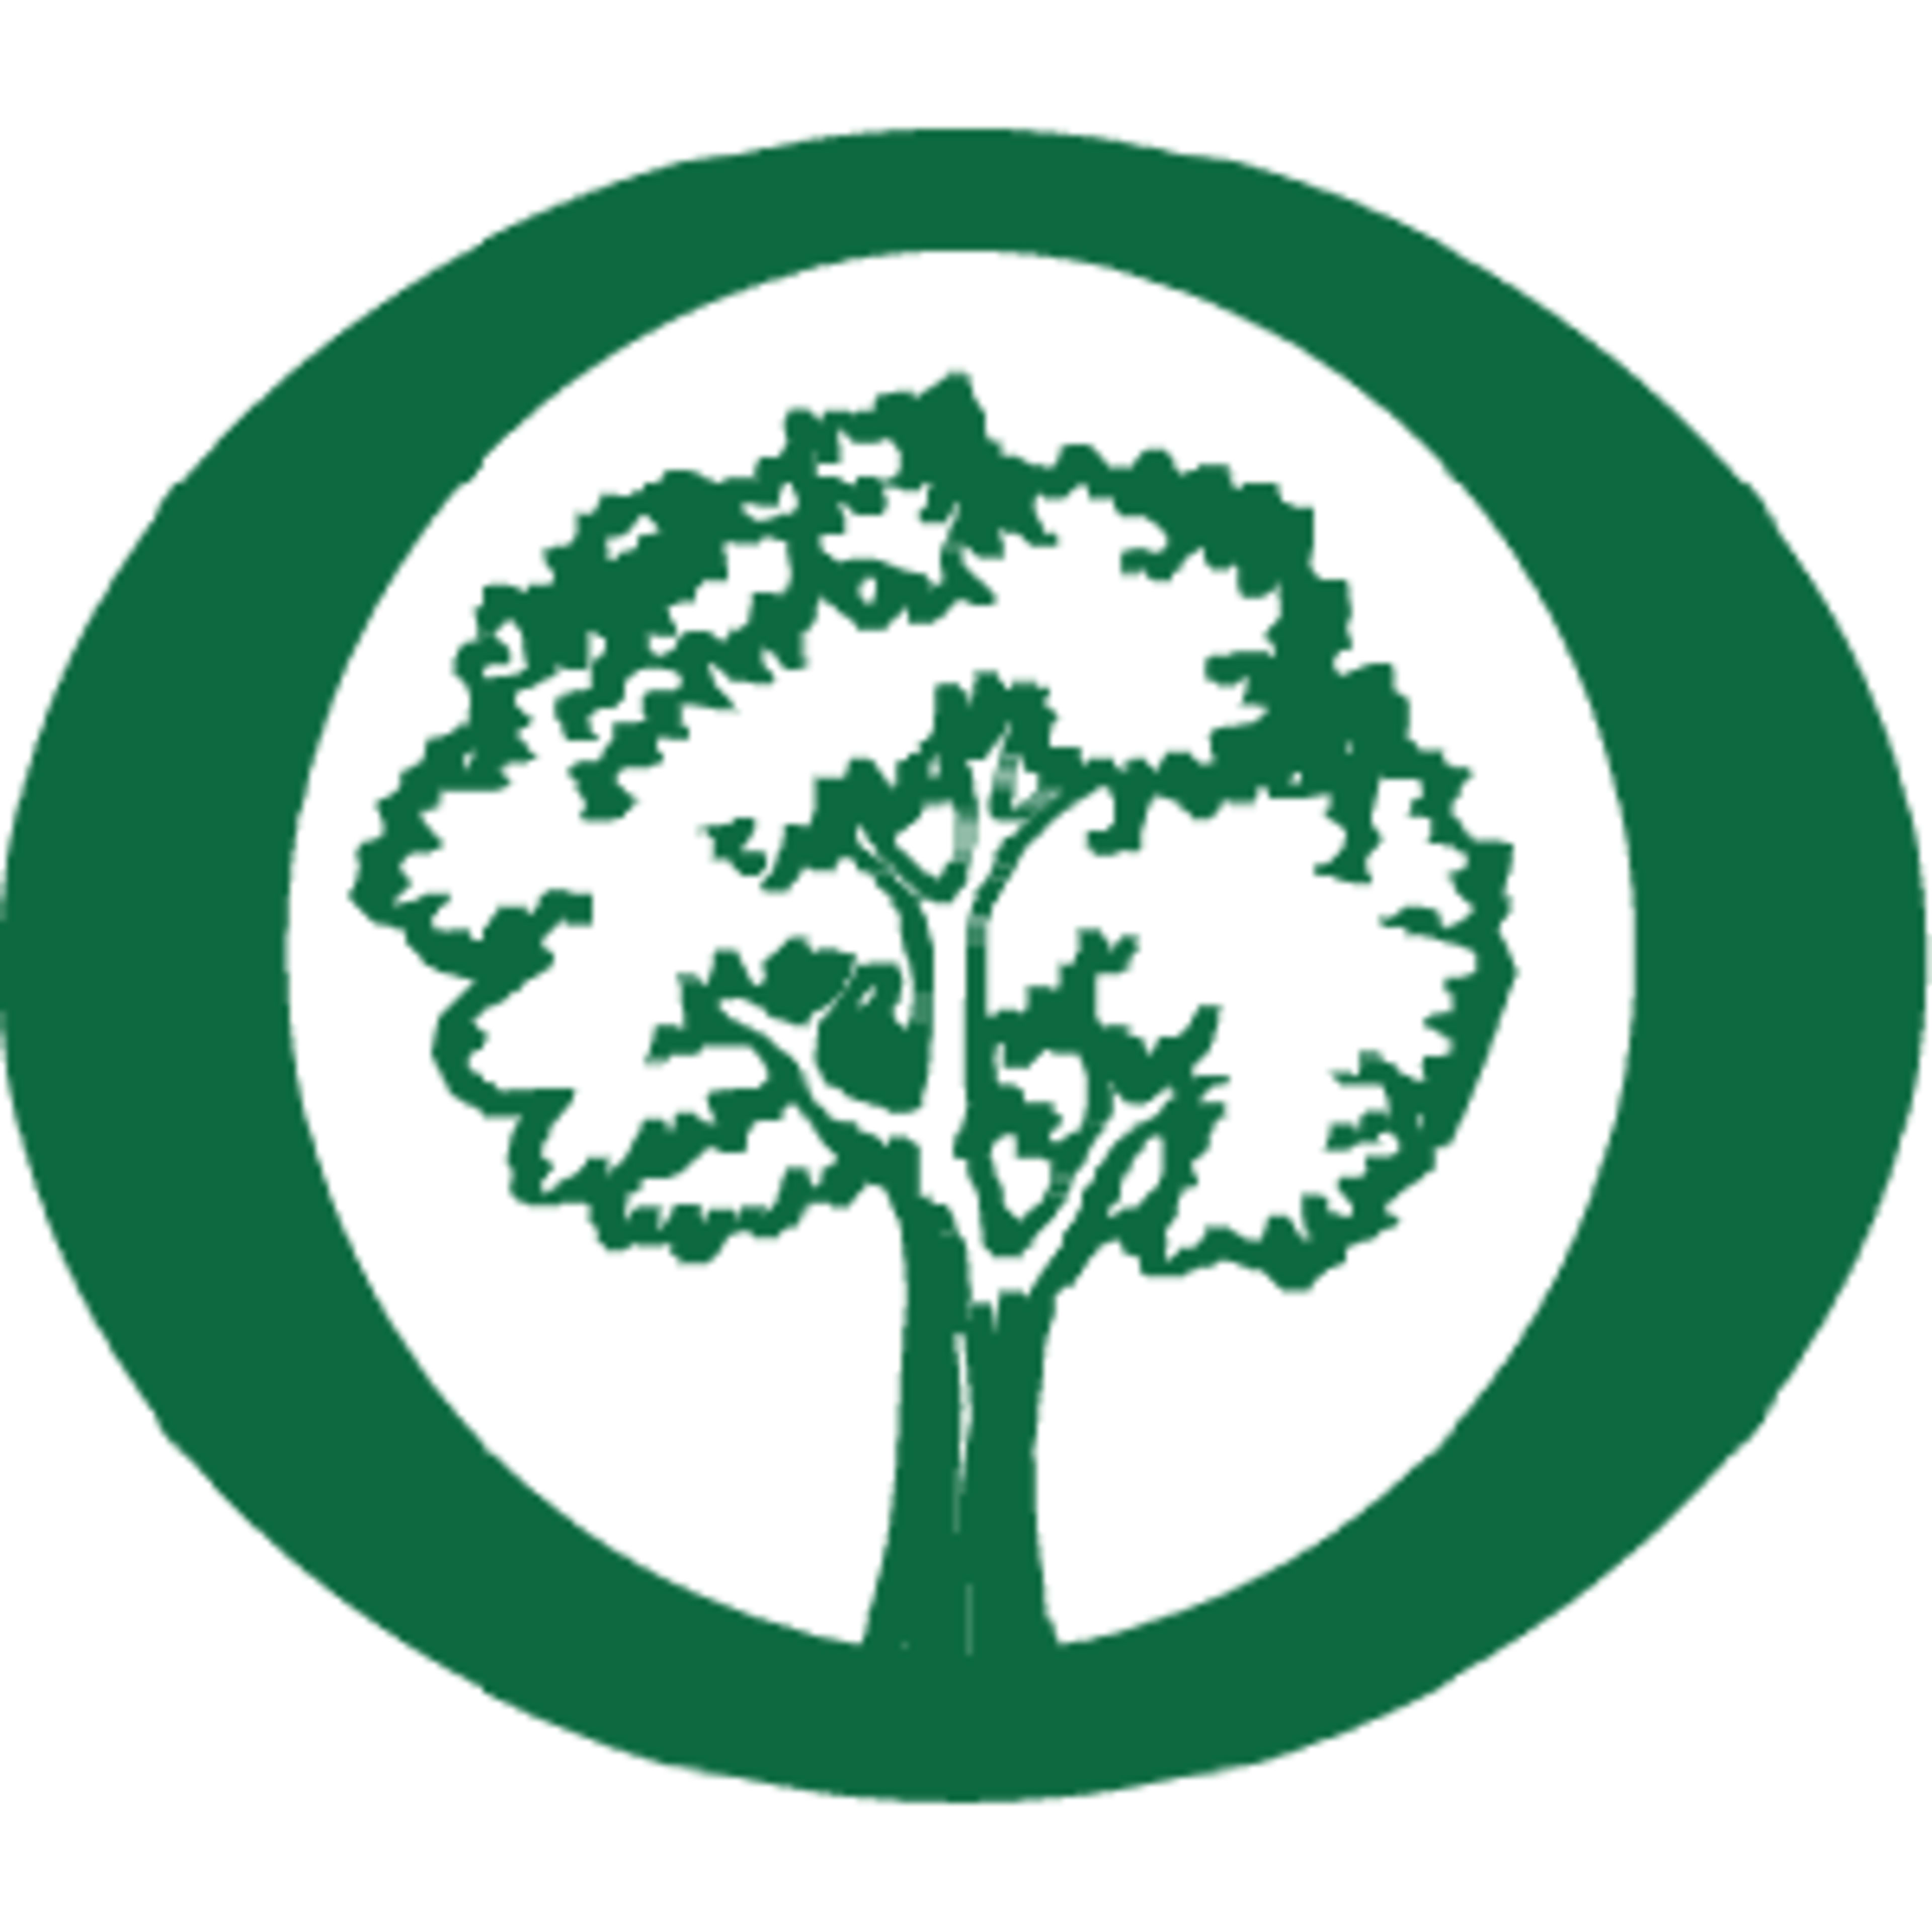 Arbor Day Foundation Code